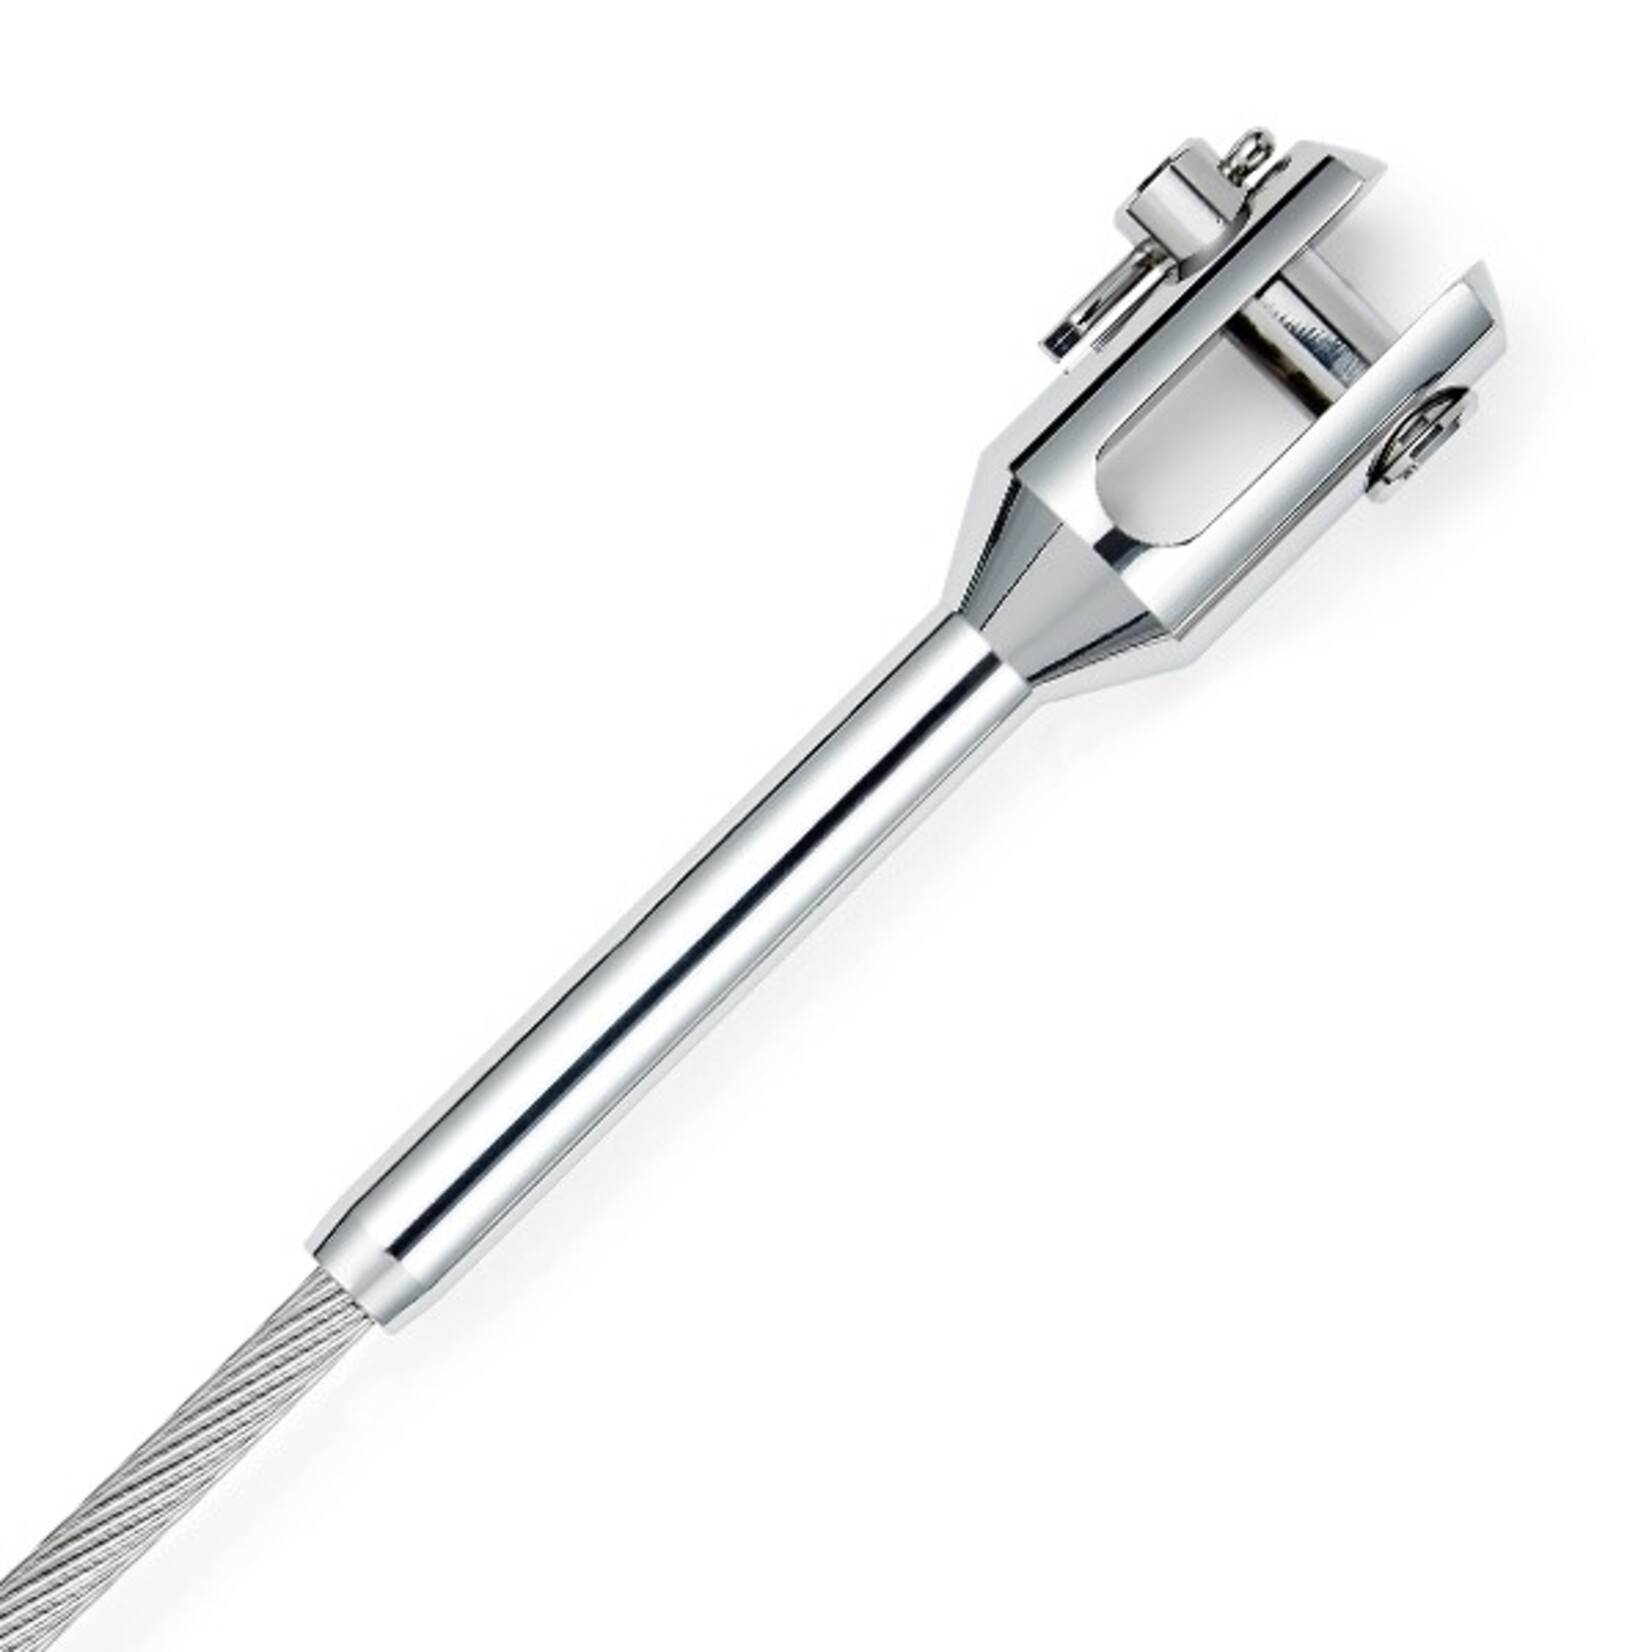 STA-LOK Swage fork  3mm. machined